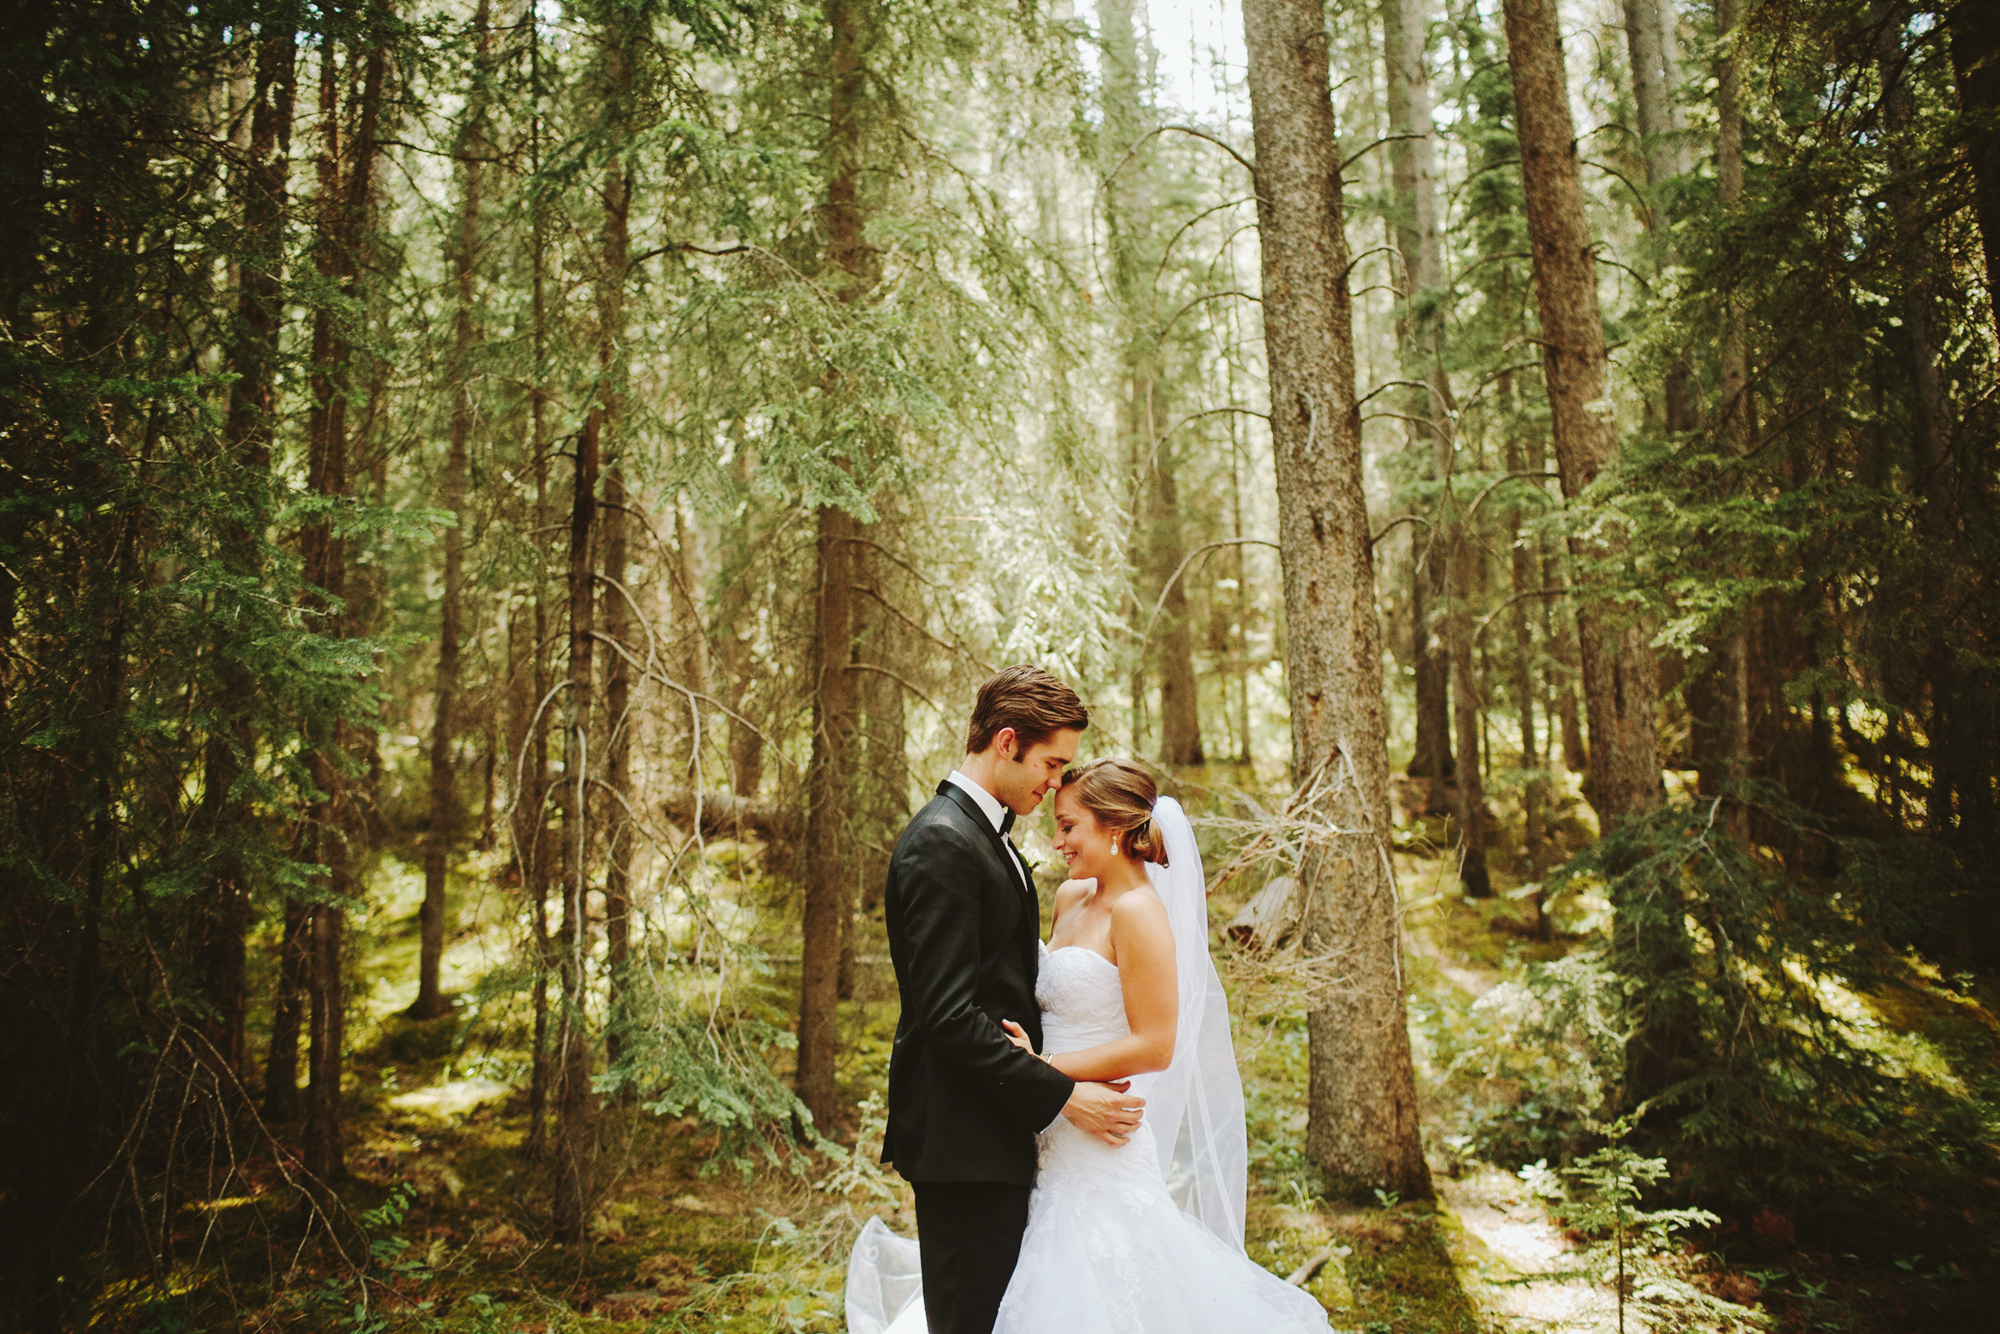 Banff Wedding Photographer, Wedding Portraits in the Woods